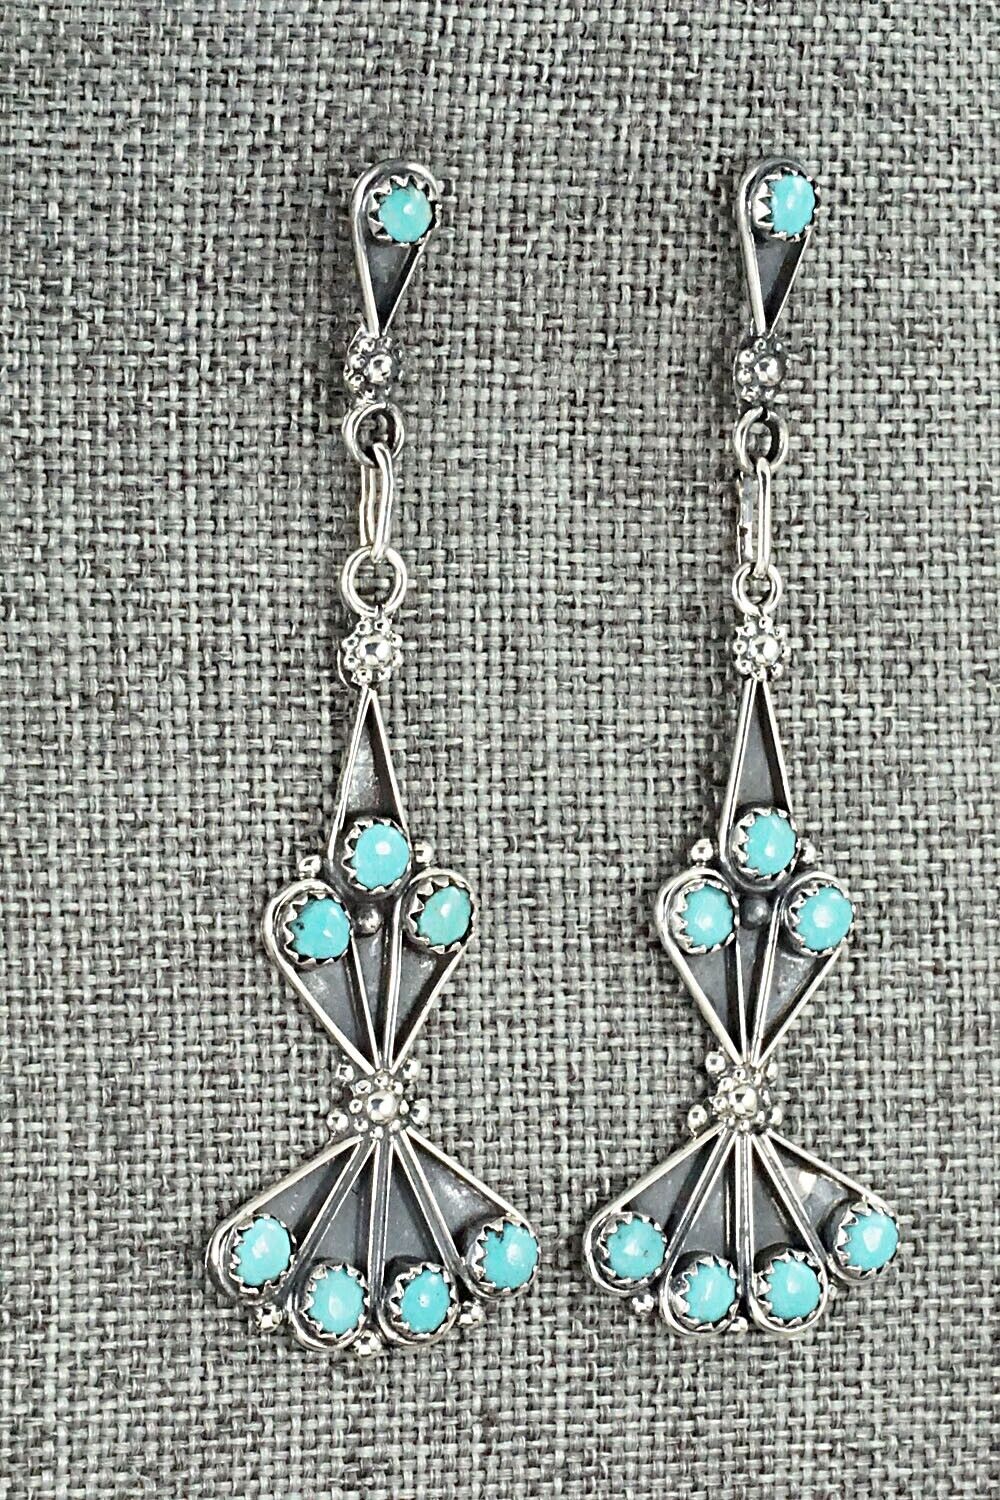 Turquoise & Sterling Silver Earrings - Vivianita Booqua